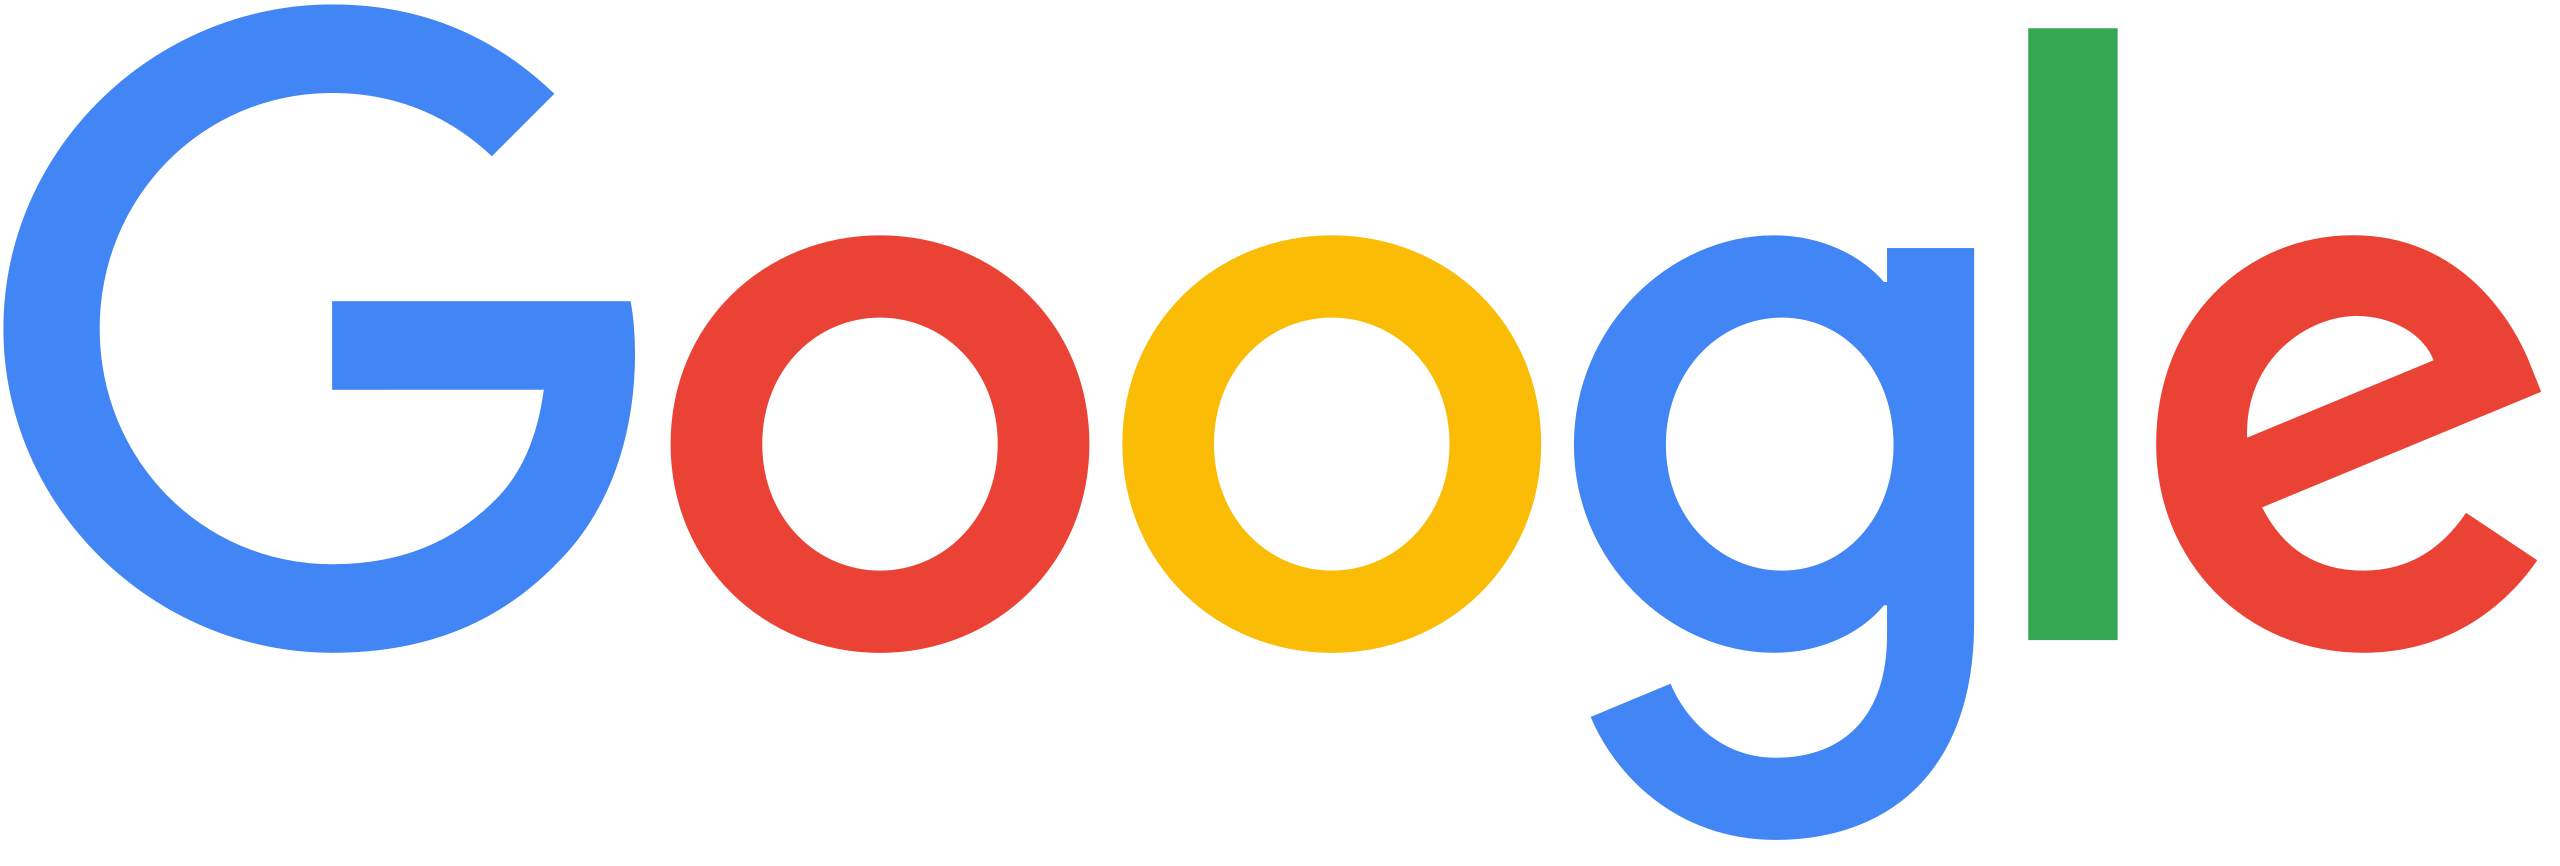 Capabilities-google-logo